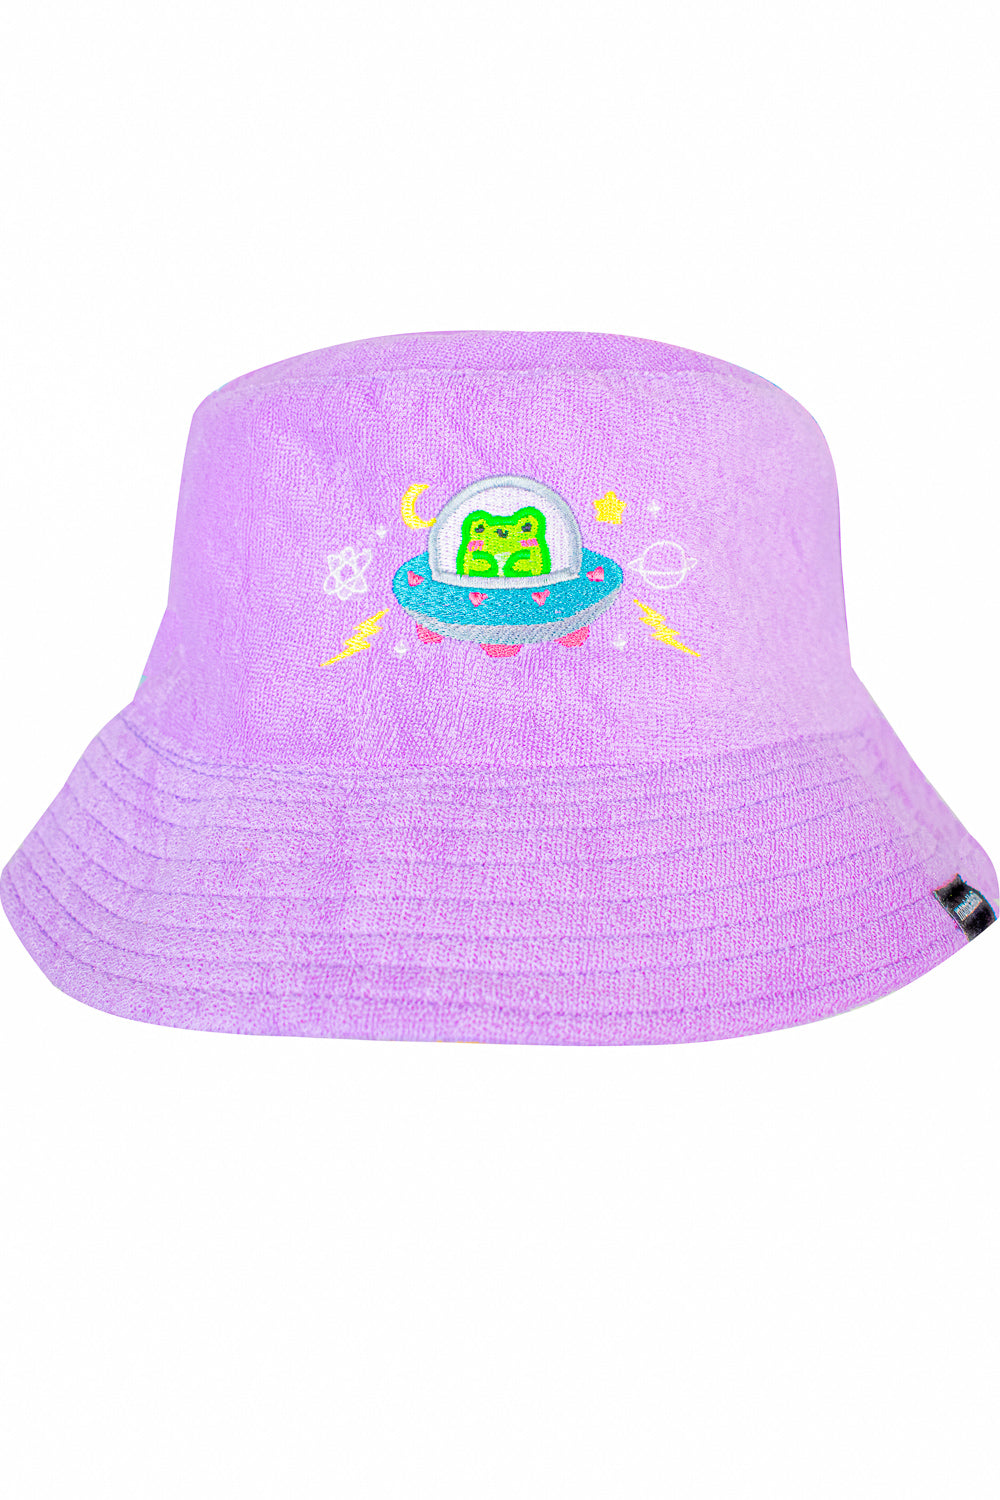 Space Albert Embroidered Bucket Hat